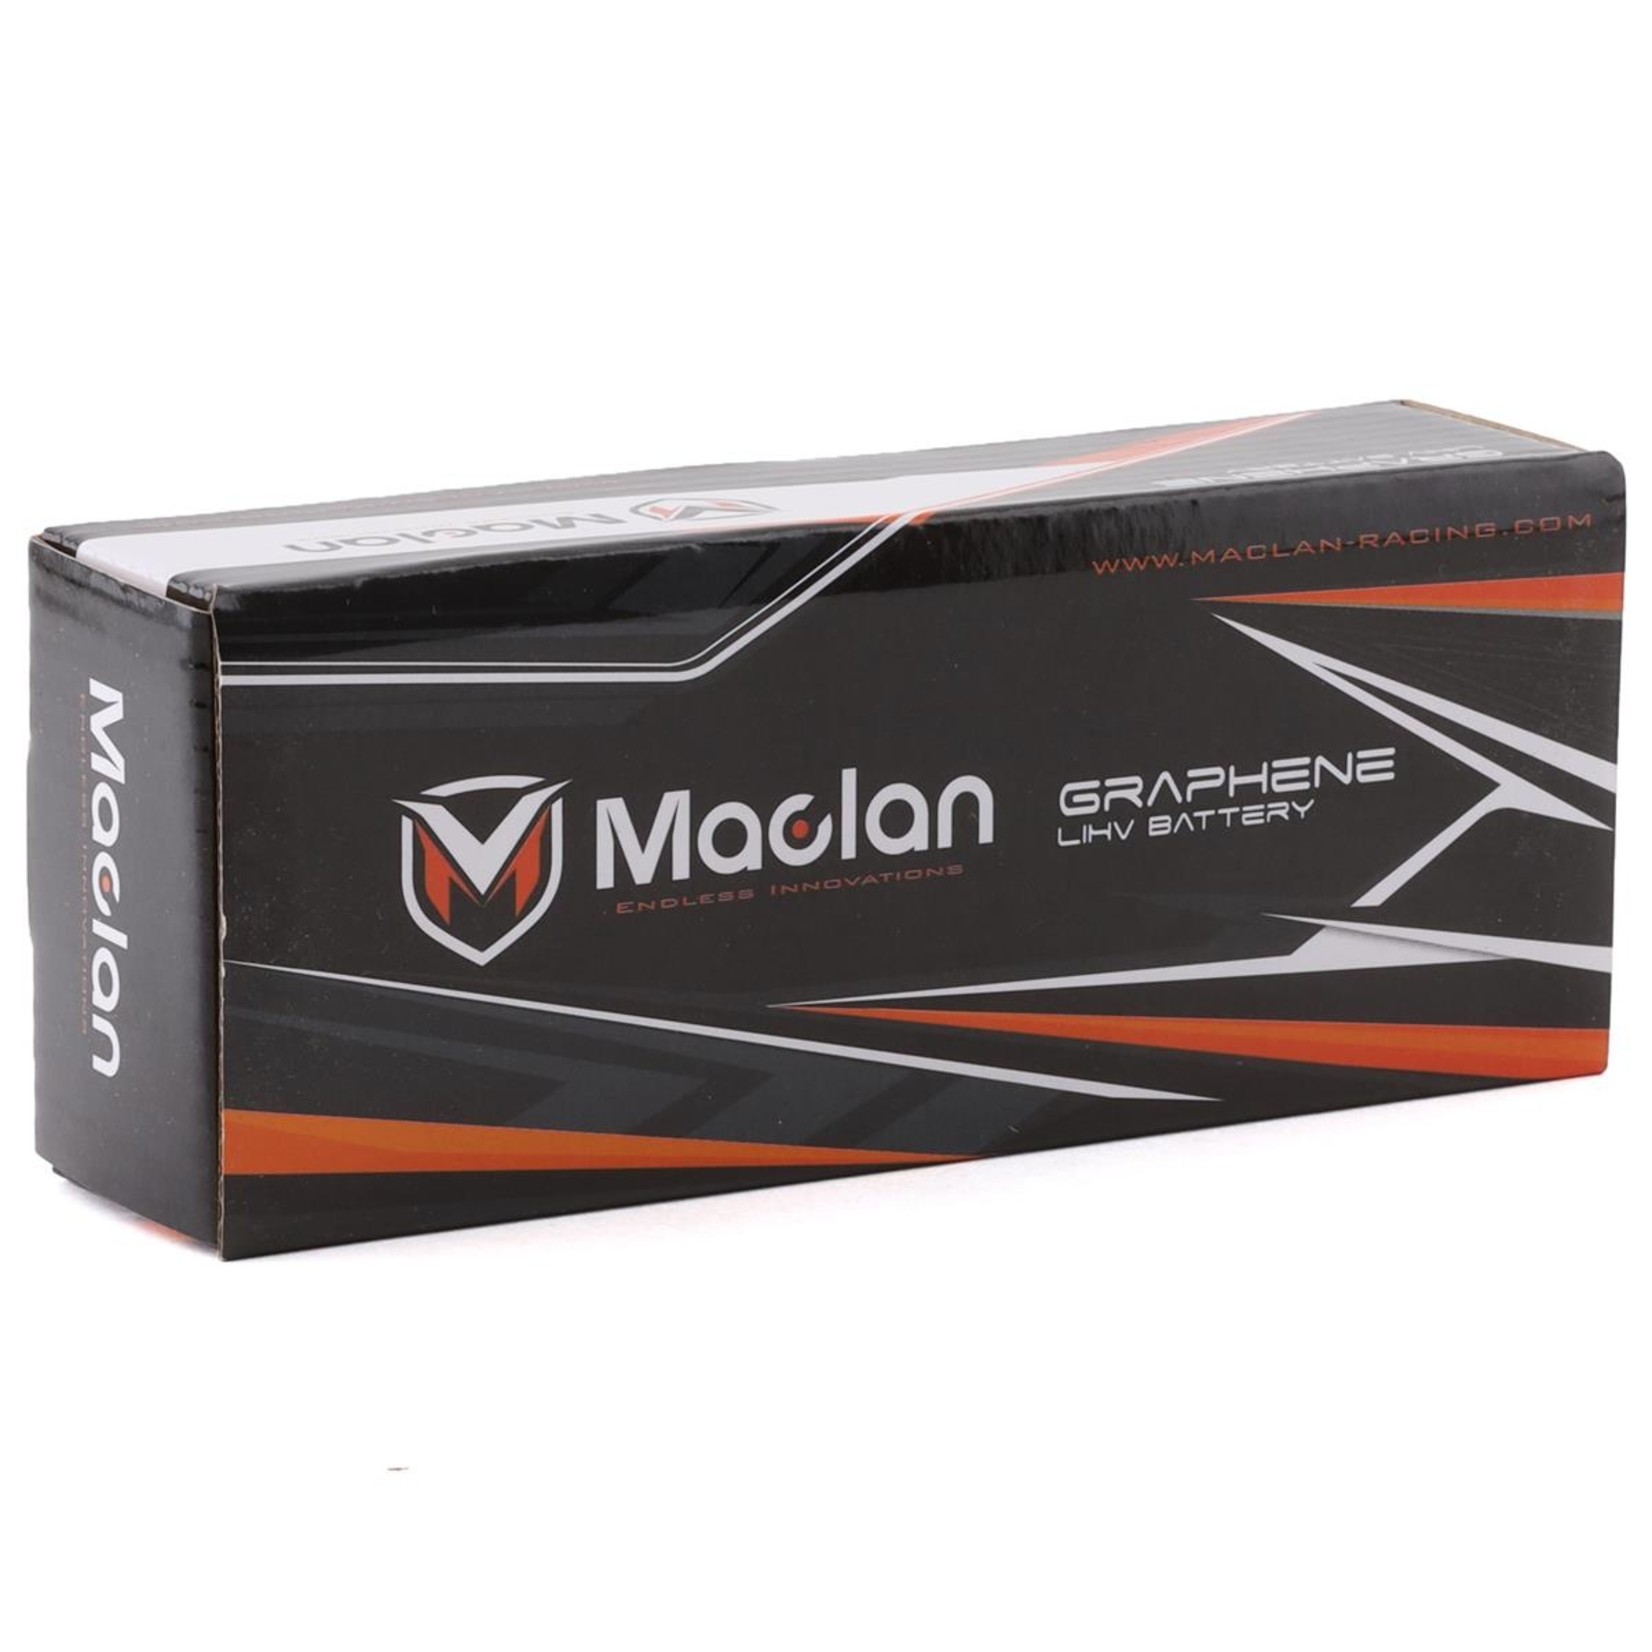 Maclan Racing Maclan Extreme Drag Race Graphene 2S 120C LiPo Battery (7.4V/7200mAh) w/XT90 Connector